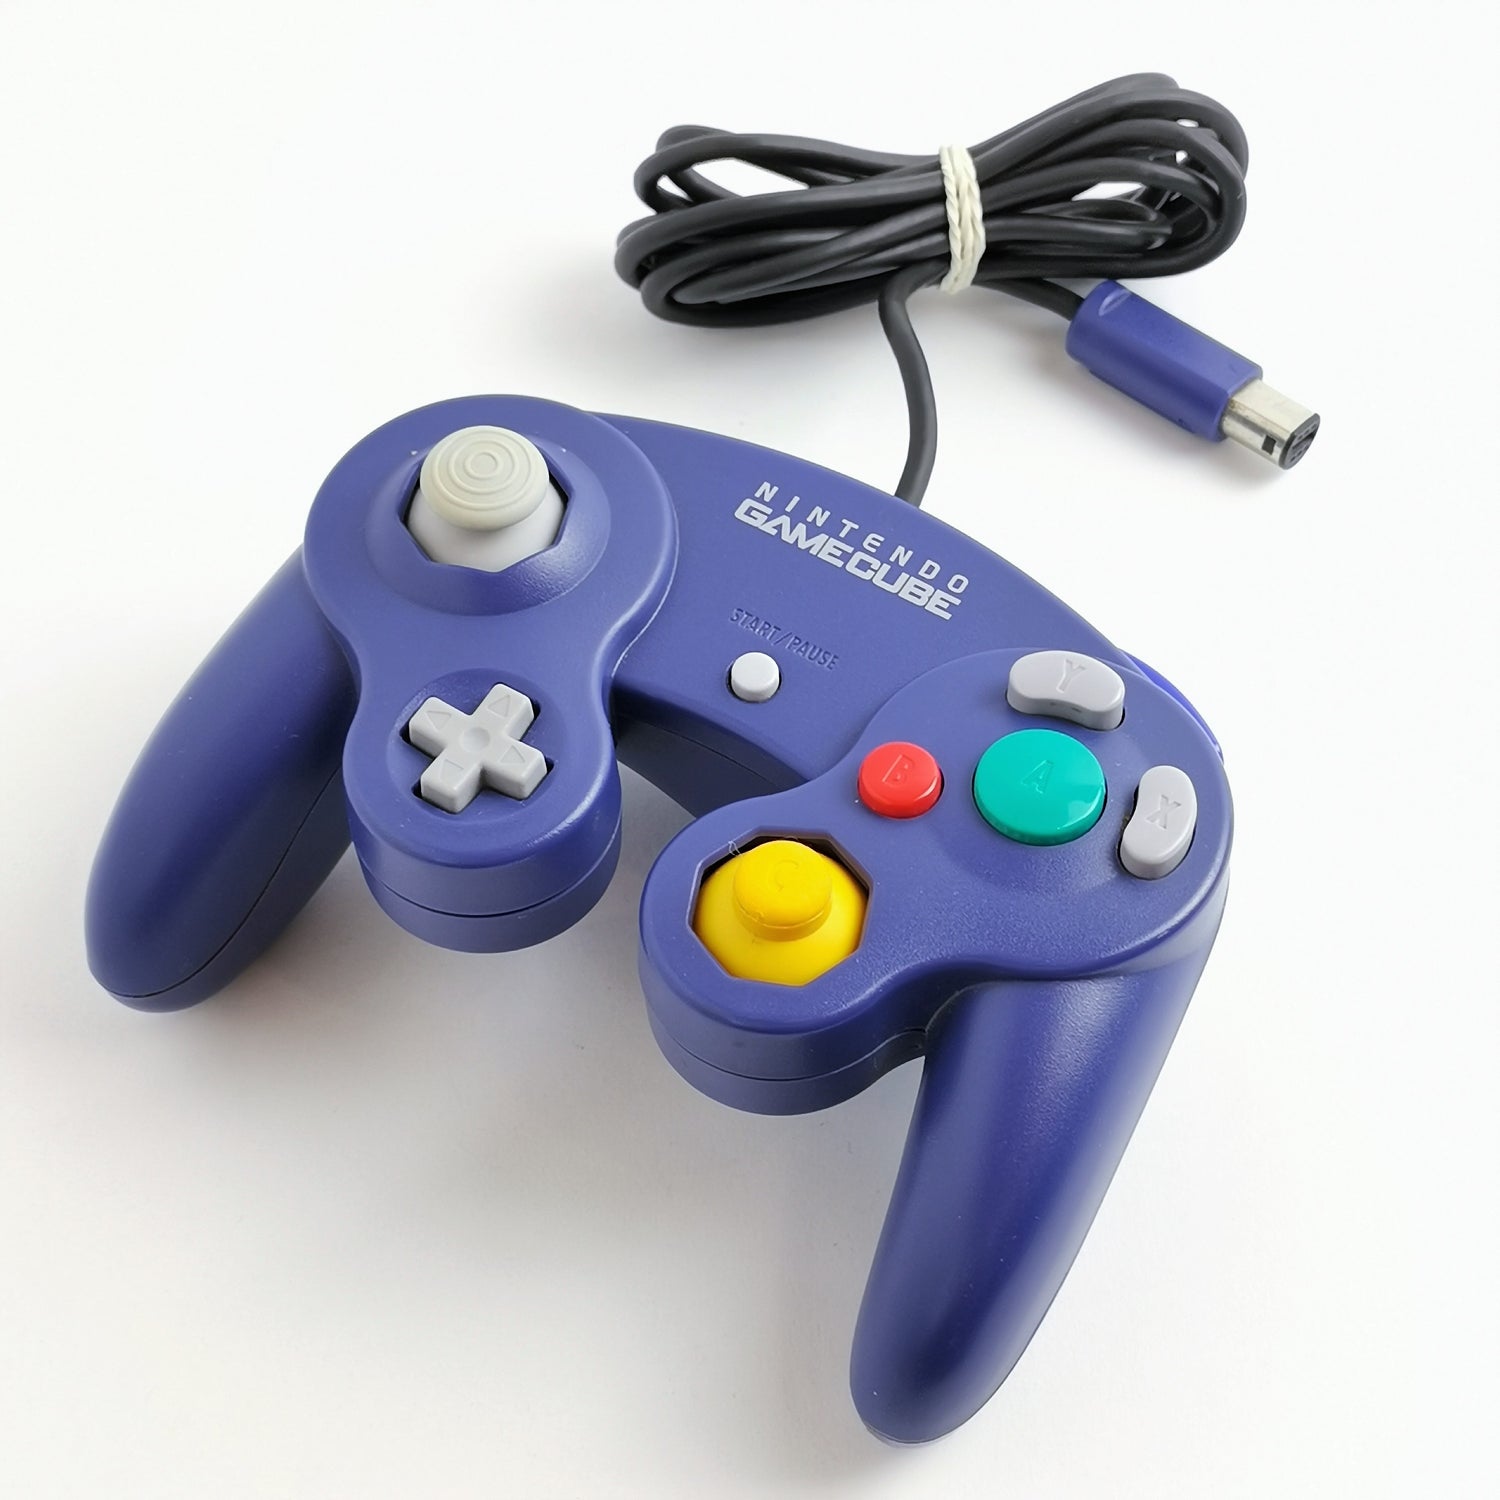 Nintendo Gamecube Accessories: Original Controller - Purple Purple | Good condition